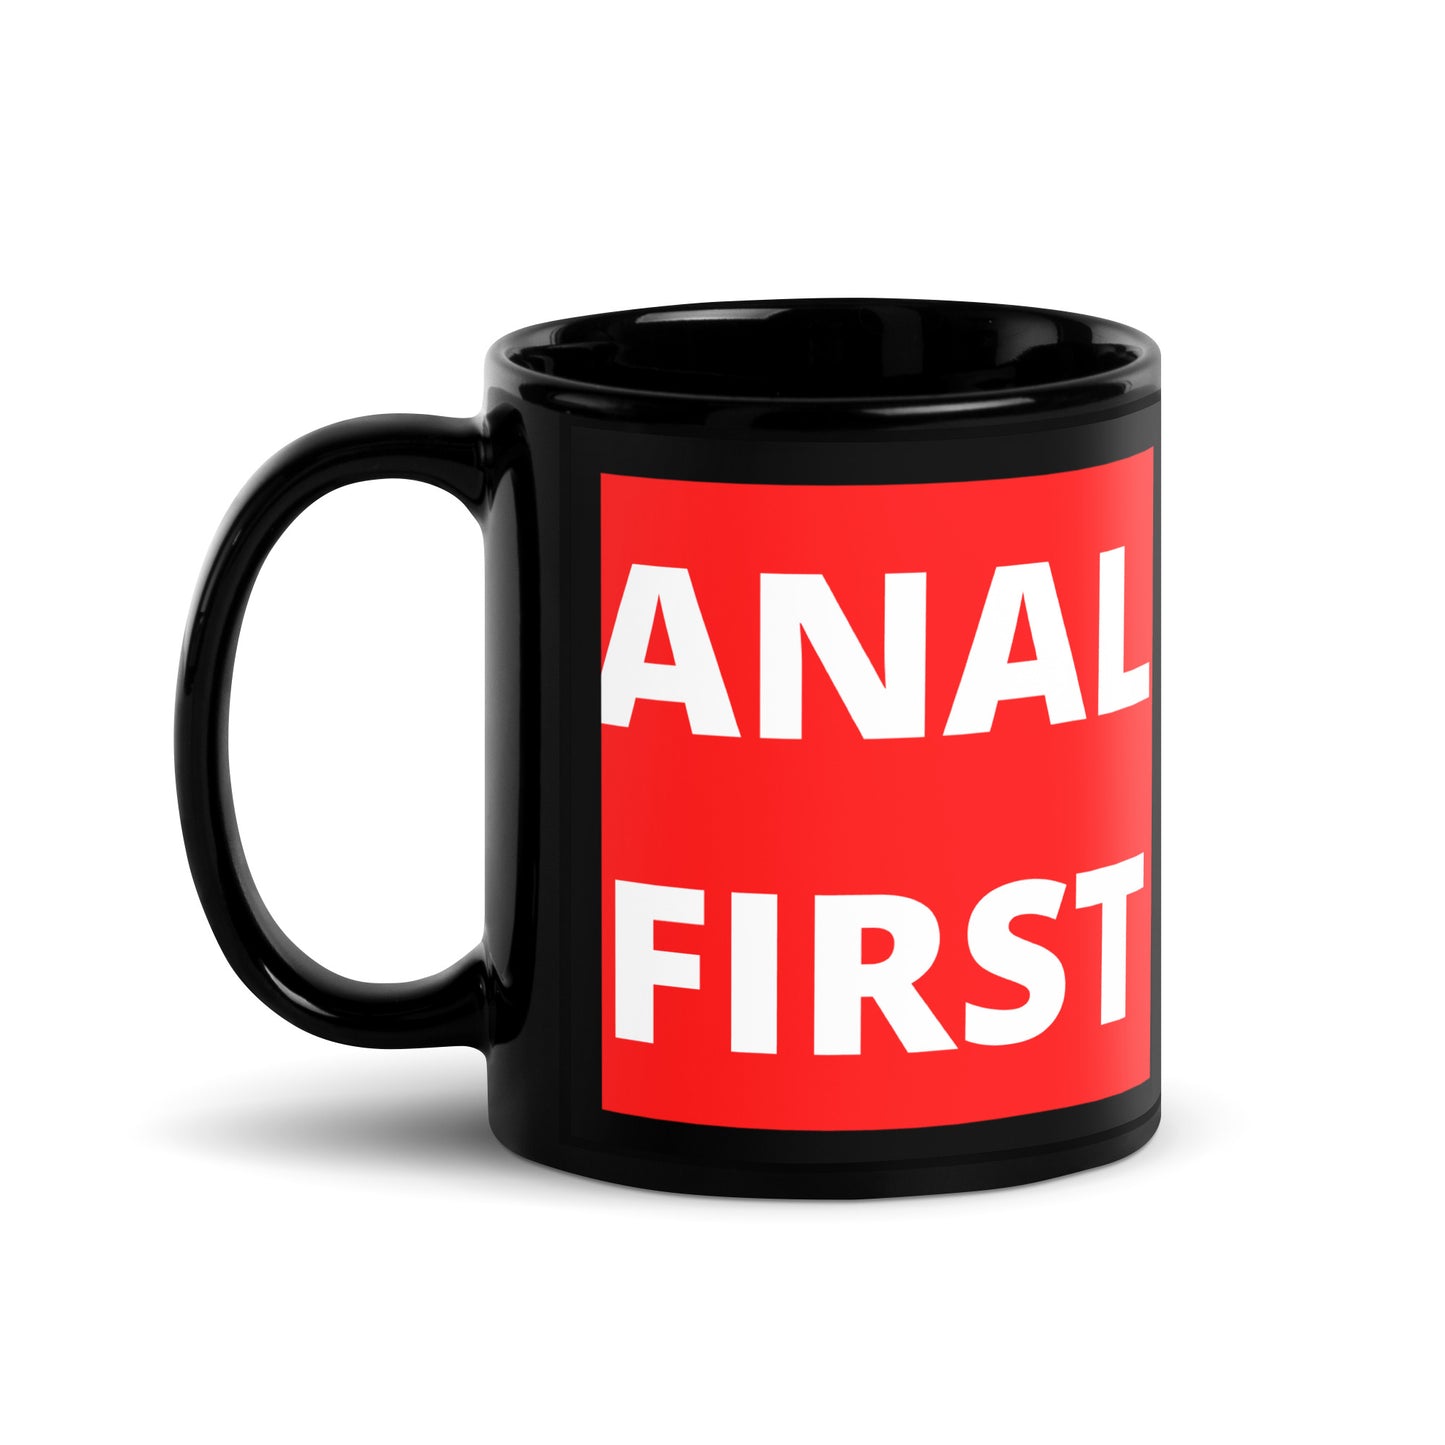 Anal First Mug